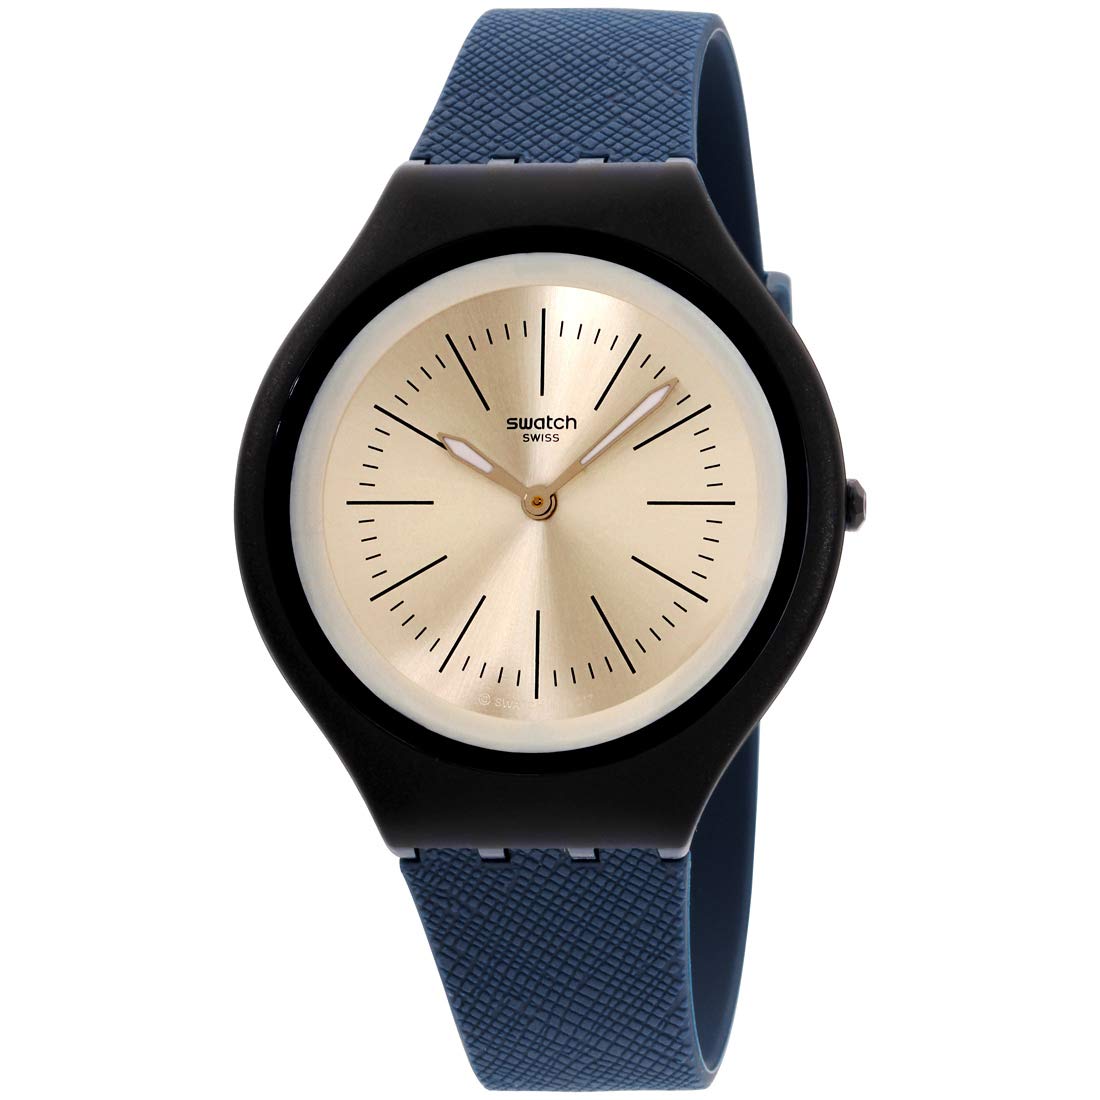 Swatch Men's Quartz Watch with Silicone Strap, Blue, 21 (Model: SVUN106)